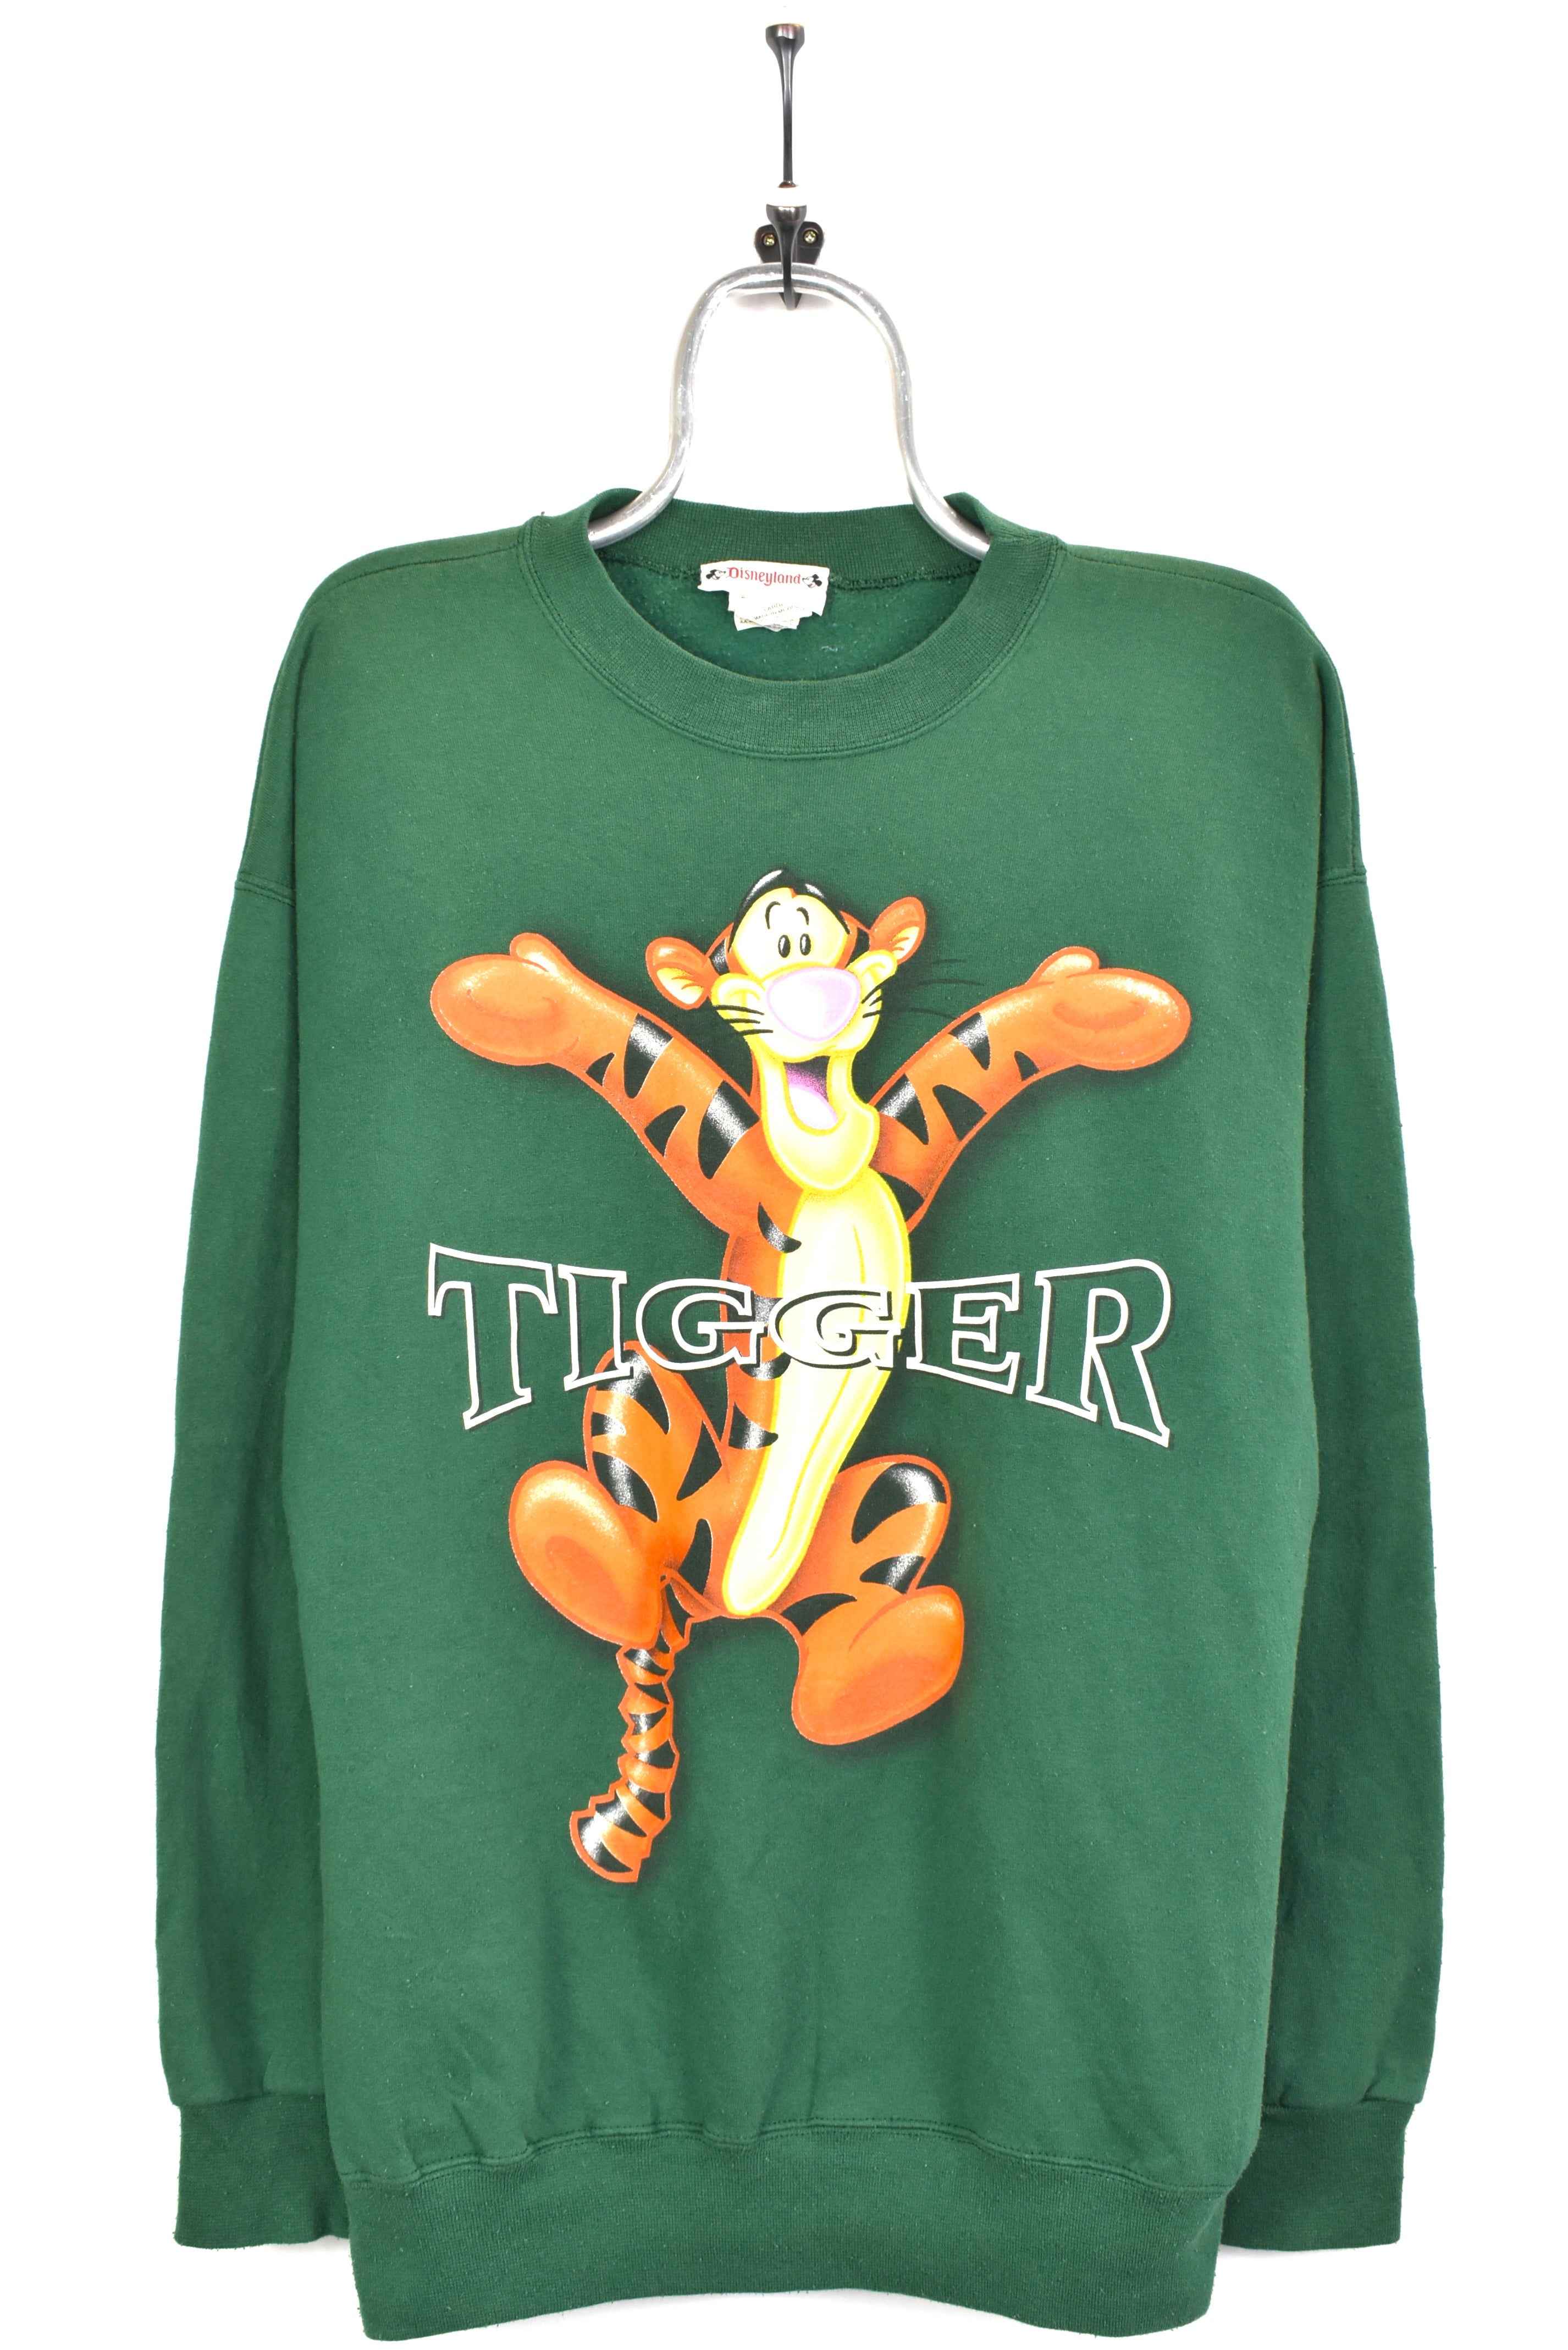 Vintage Tigger sweatshirt, Disney green graphic crewneck - large DISNEY / CARTOON